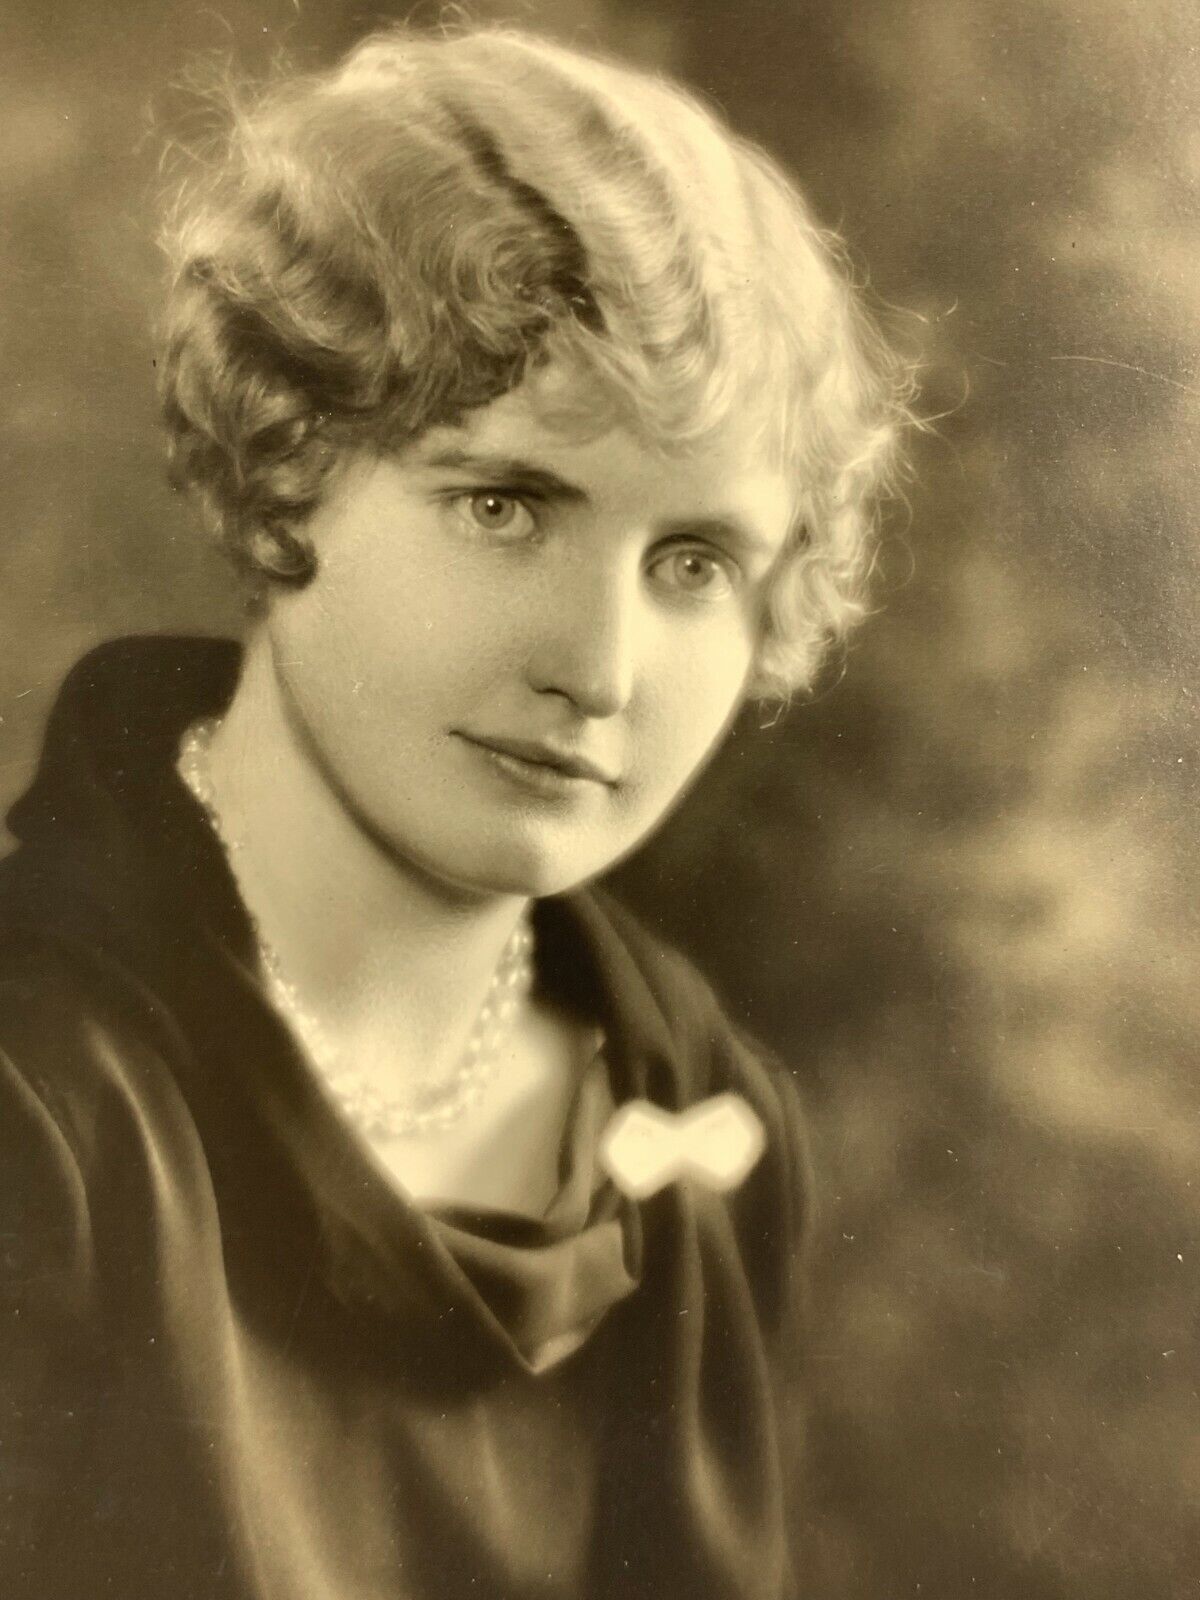 Bm) Found Photograph Beautiful Woman Portrait Short Hair Style 1910\'s-1920\'s